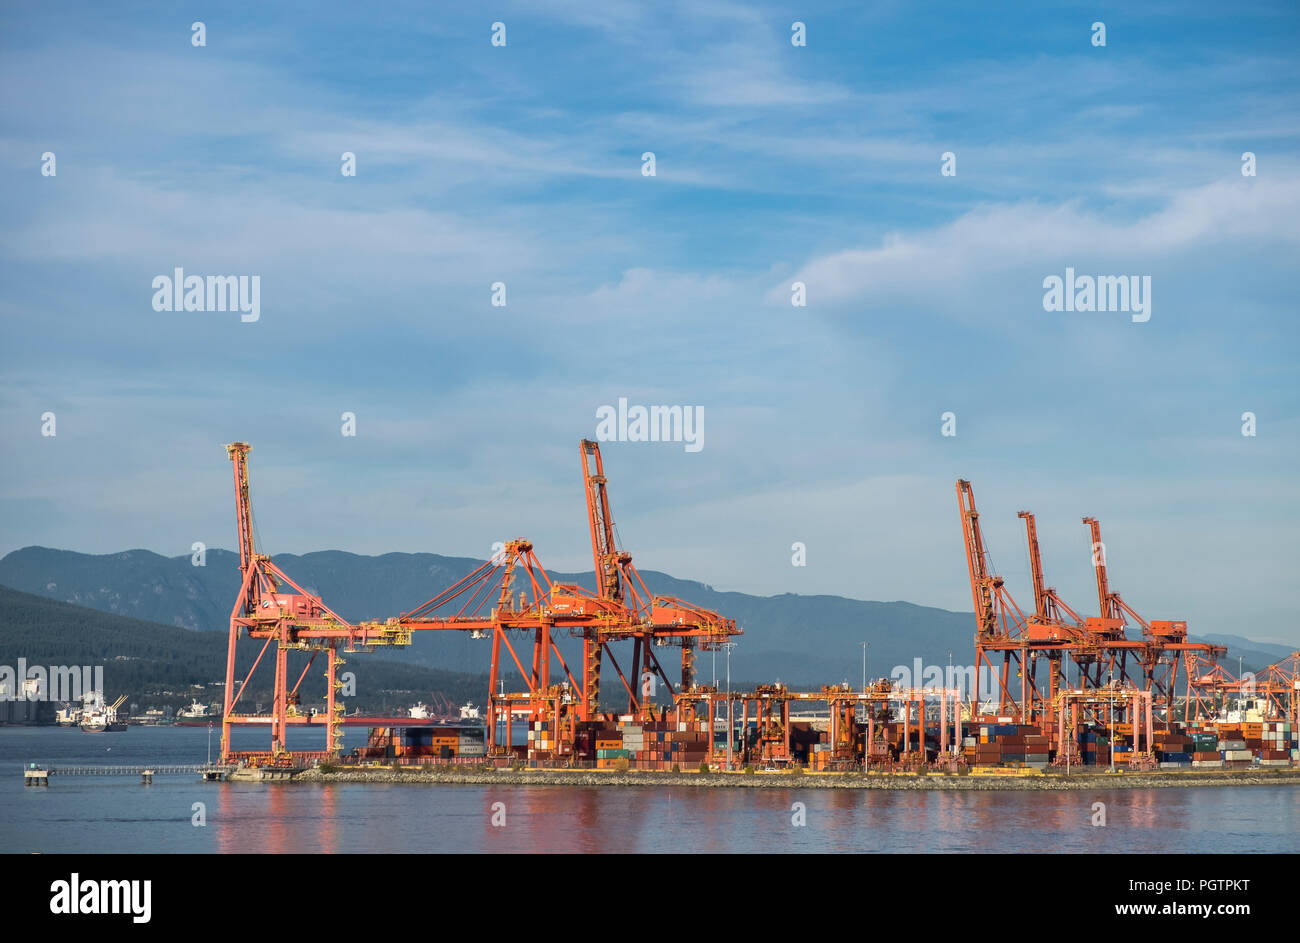 Orange cranes at the container port in Vancouver British Columbia Canada. Stock Photo